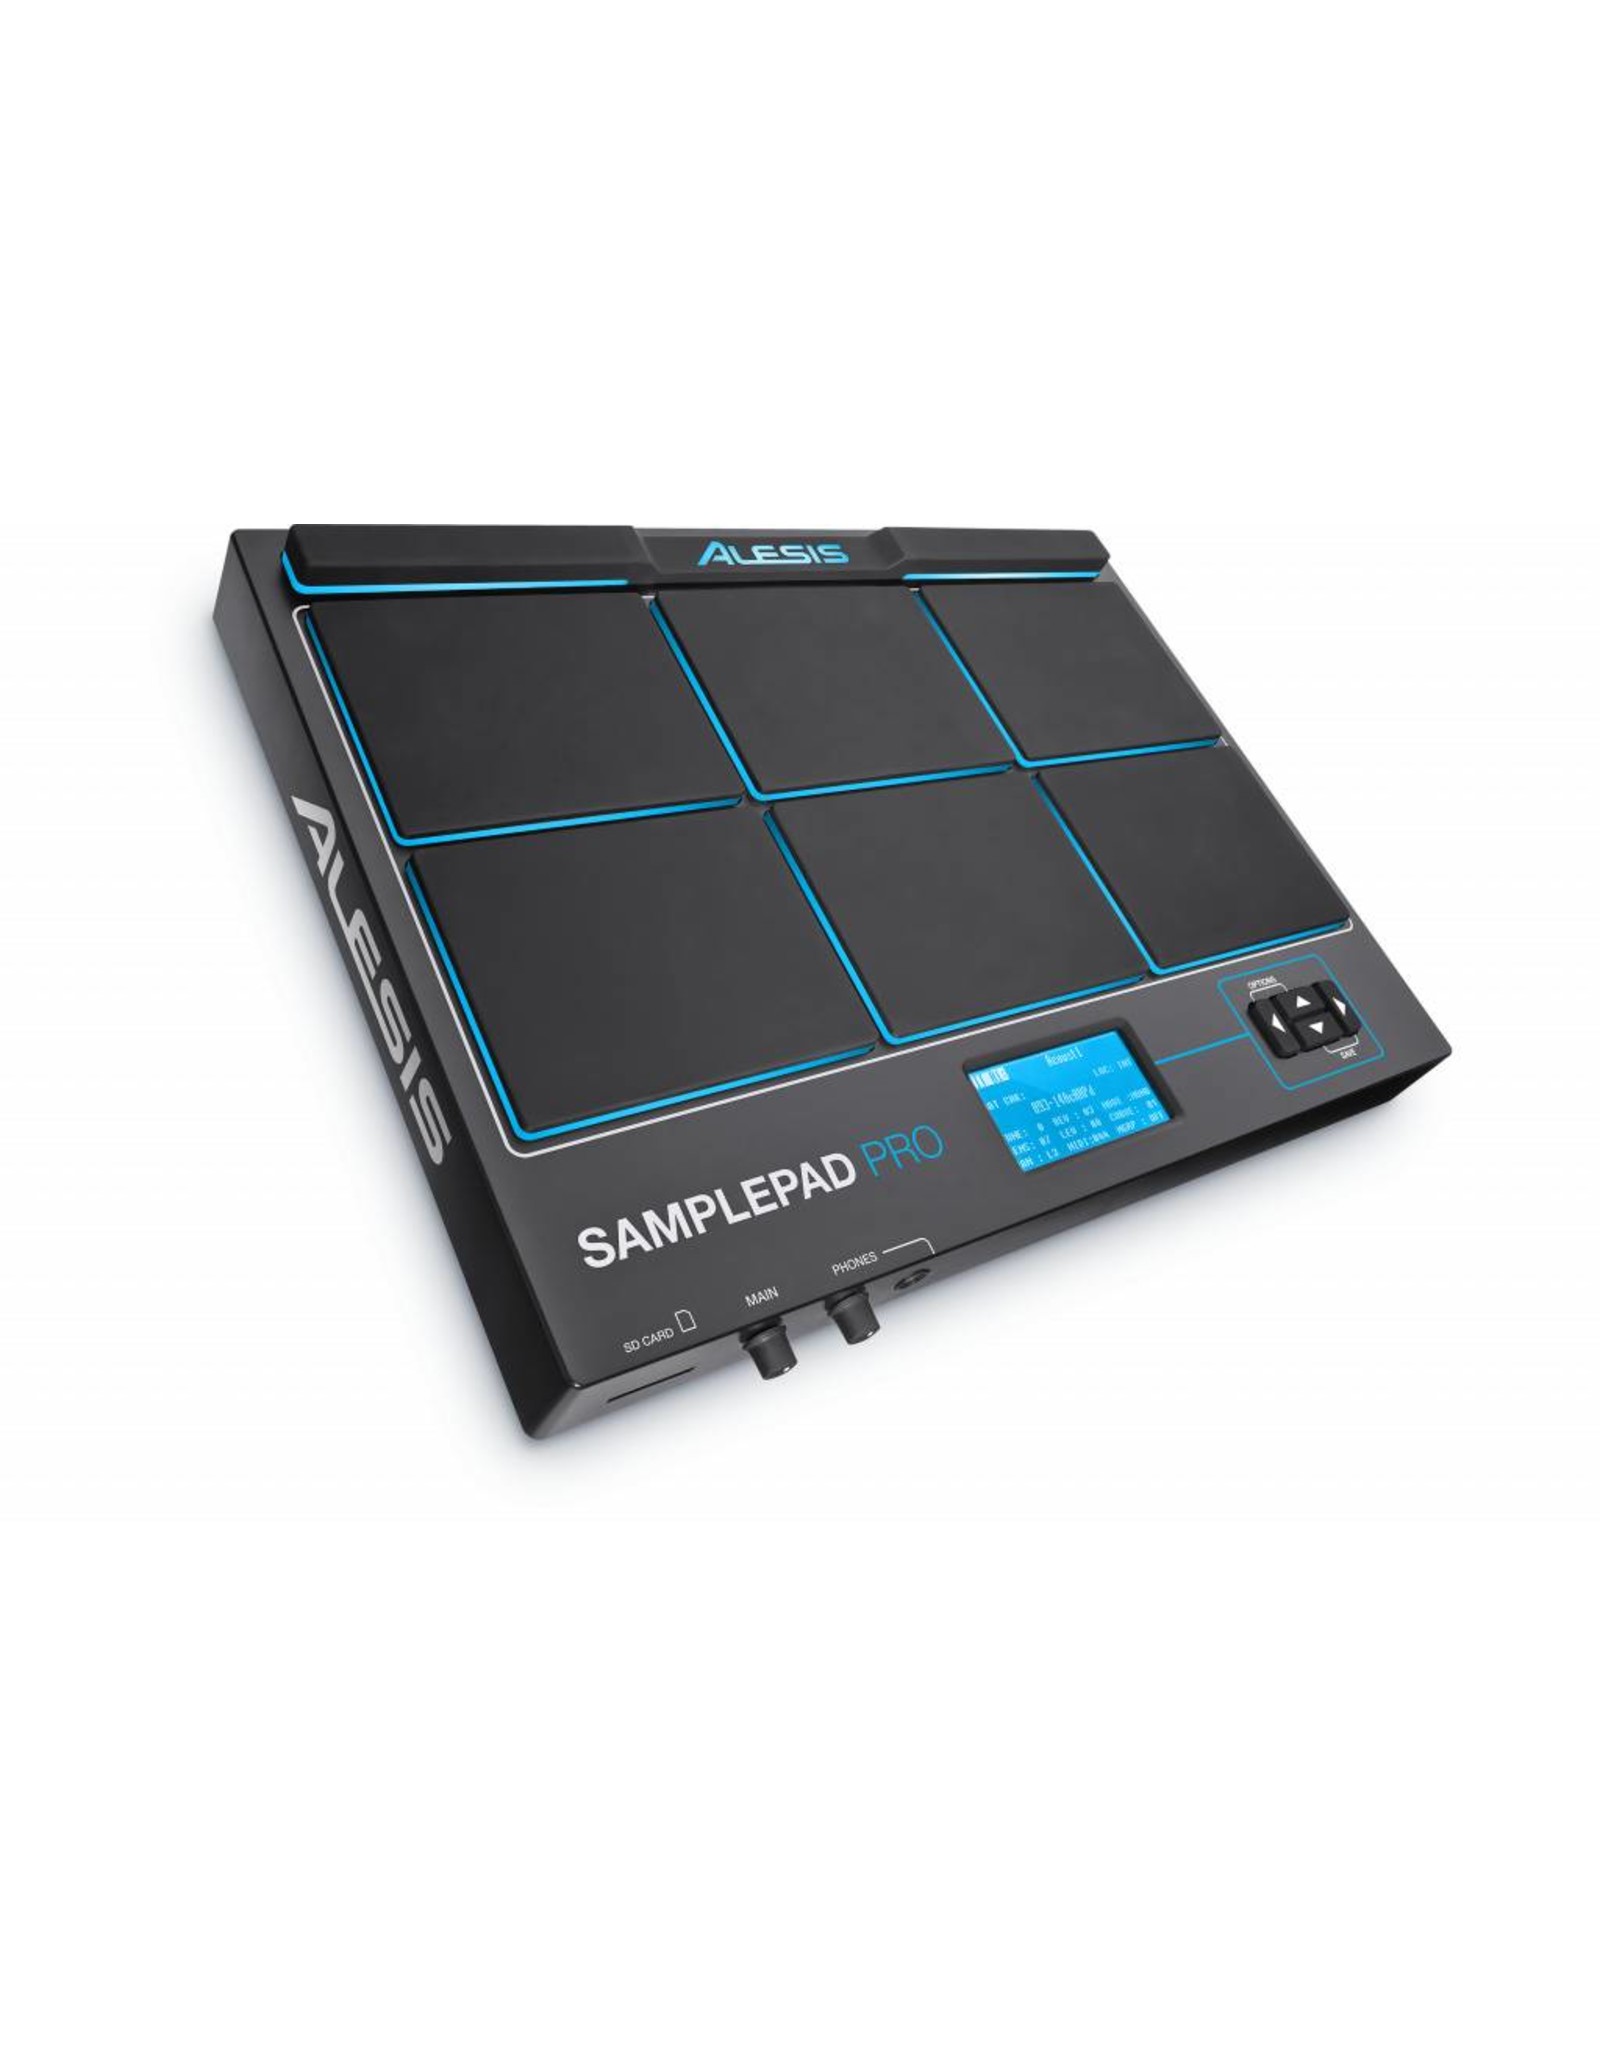 Alesis SAMPLEPAD PRO 8-Pad Percussion und Sample-Triggering Instrument